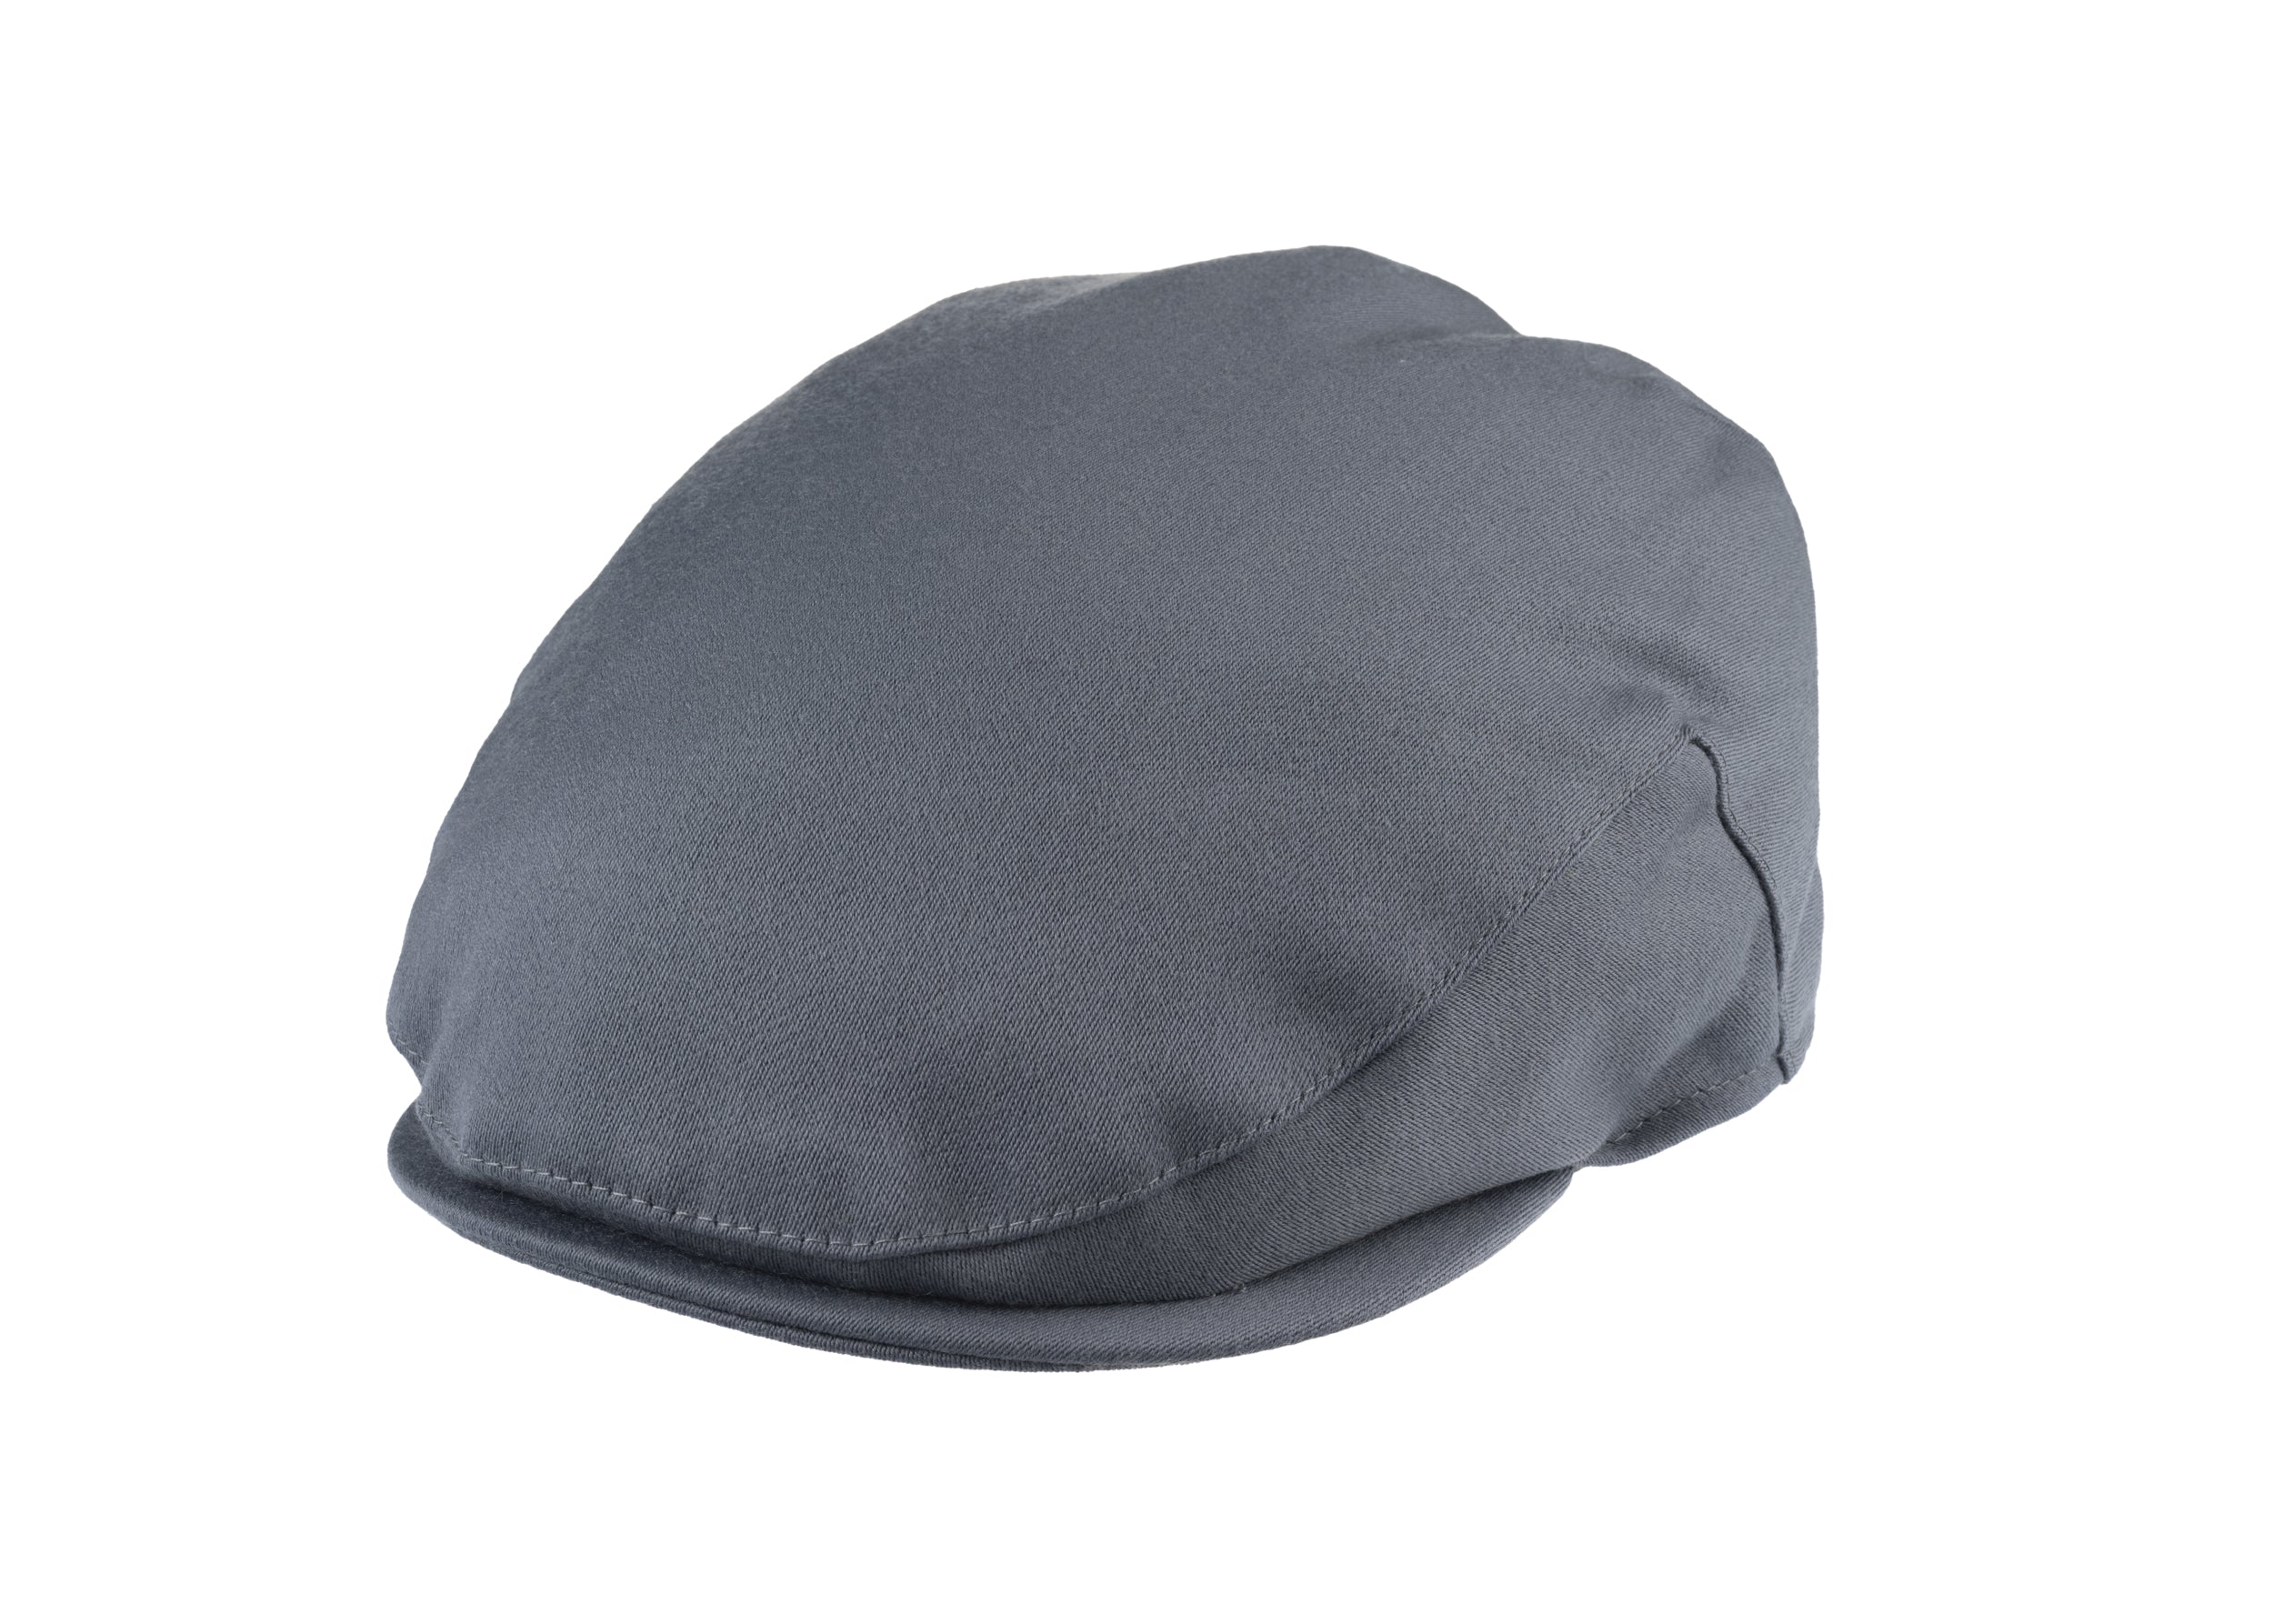 Ellis Balmoral flat cap in satin wool fabric in Slate